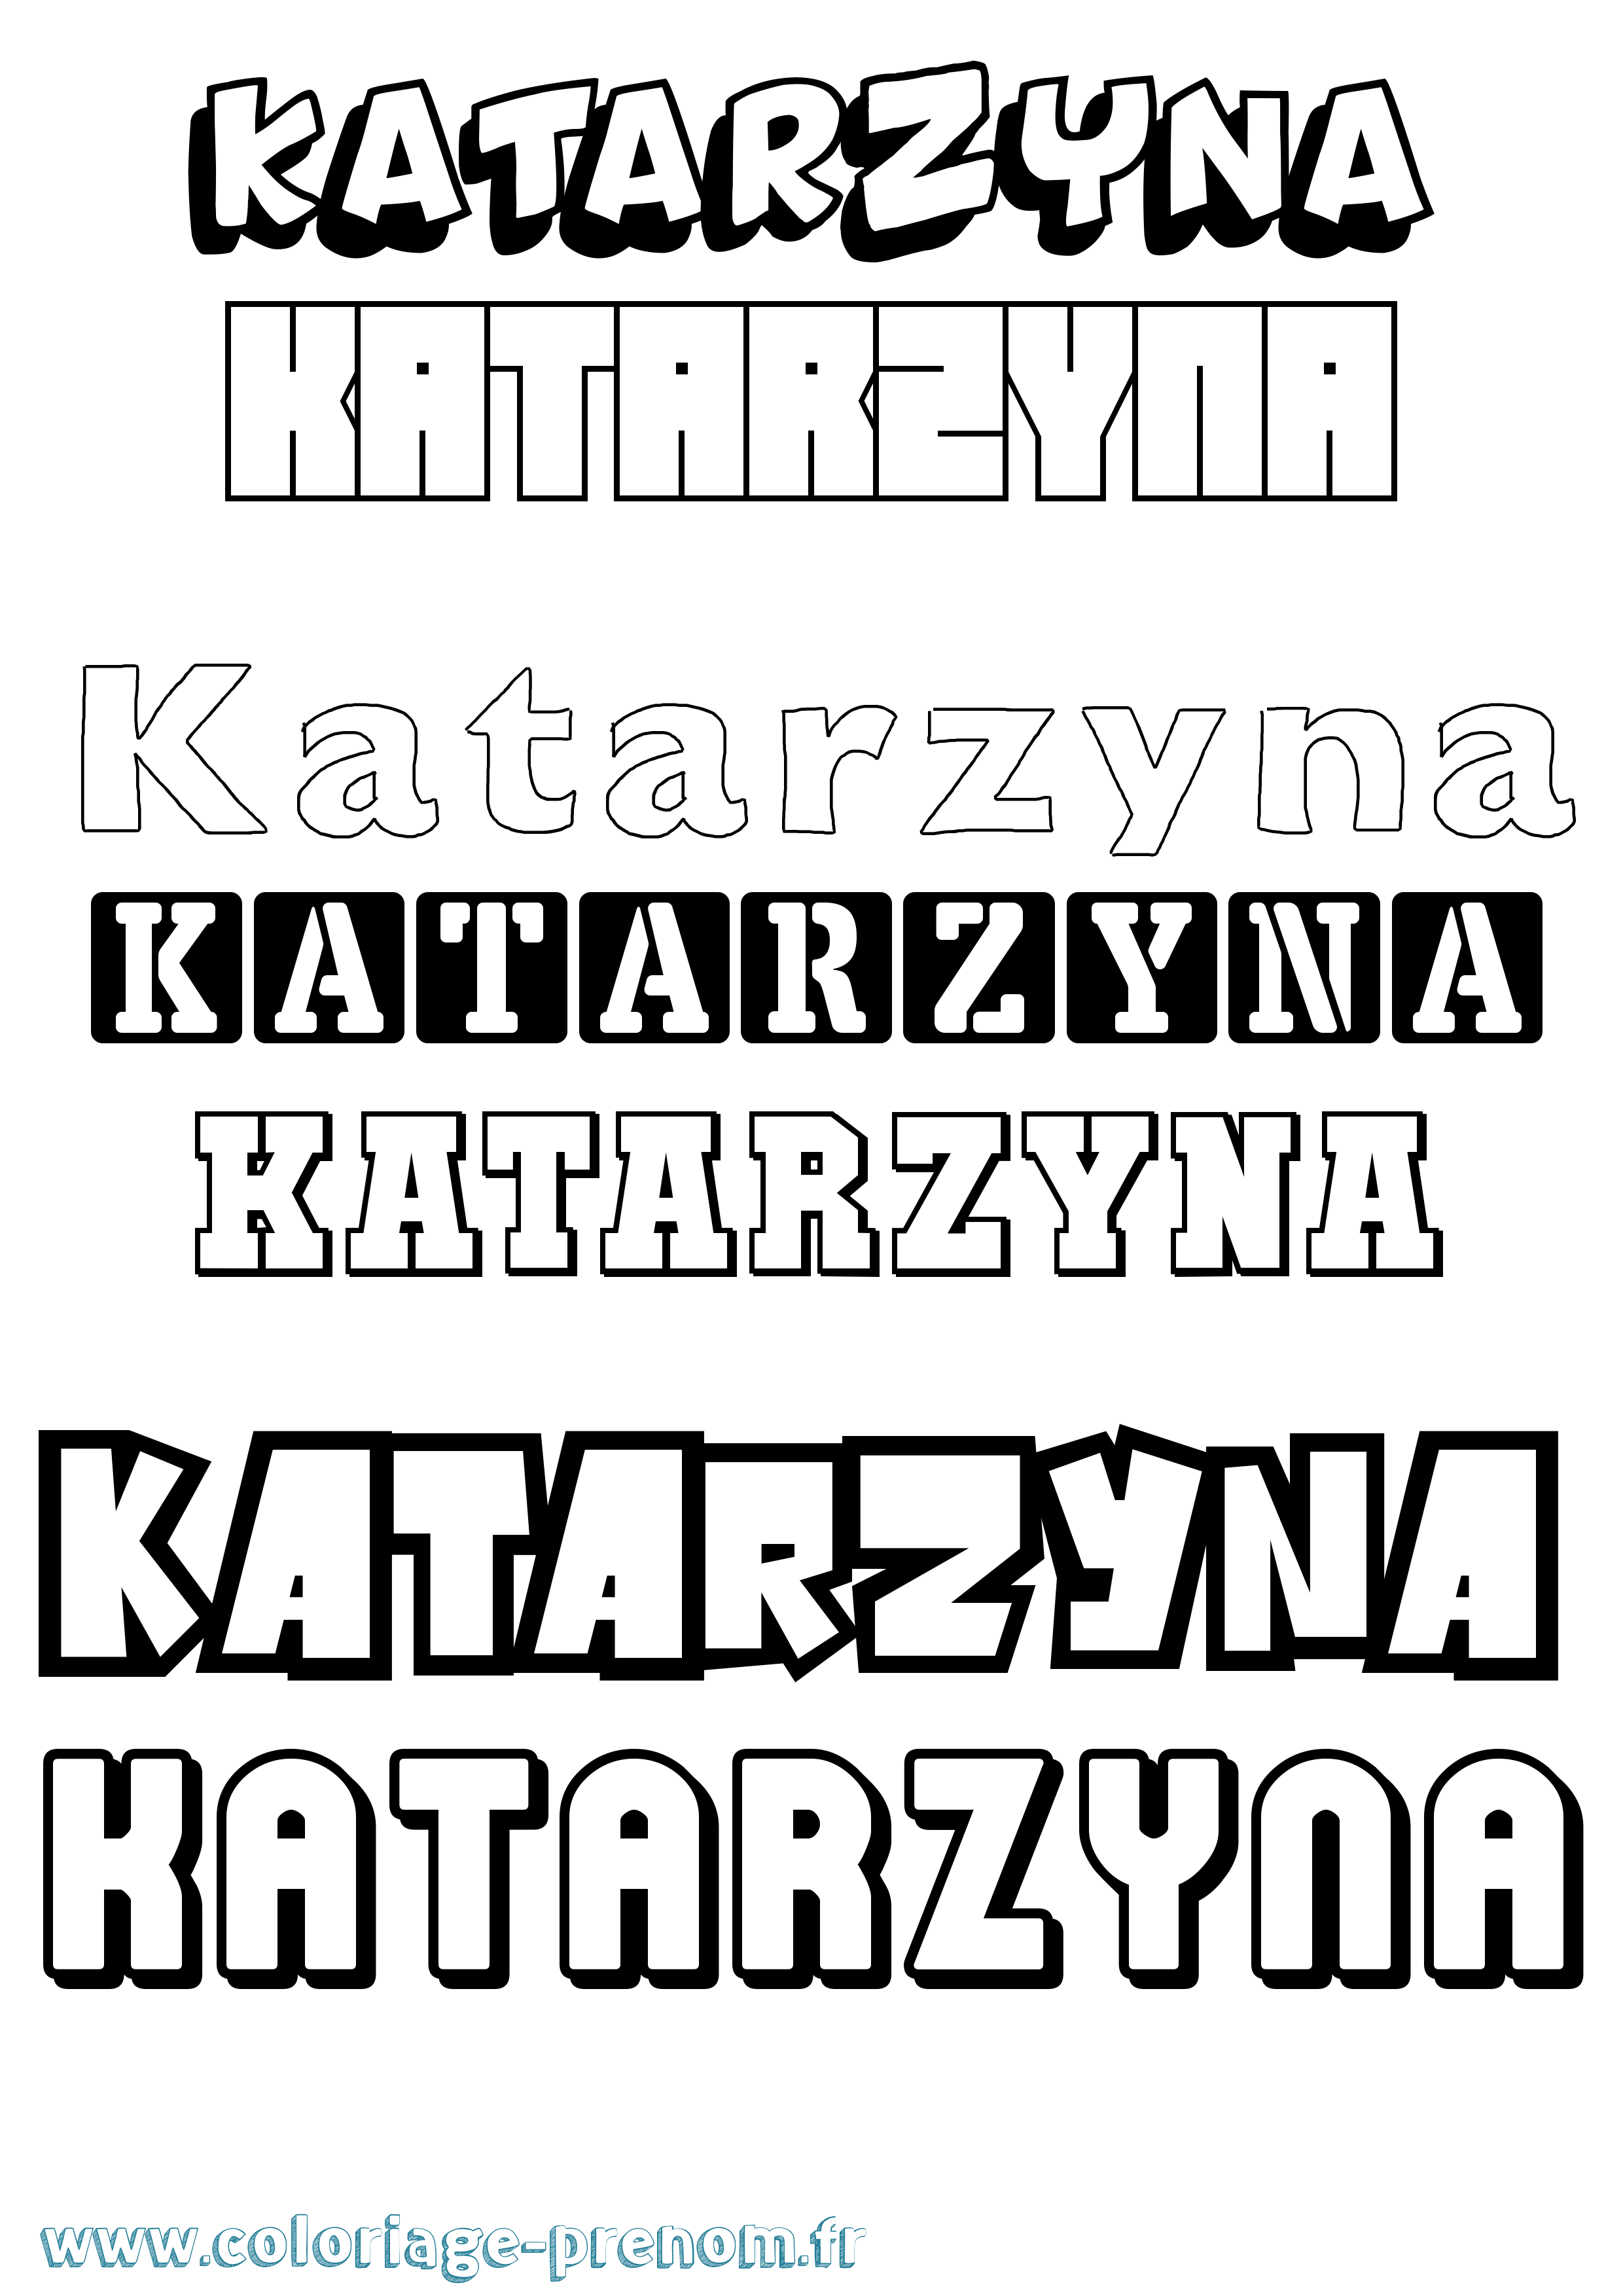 Coloriage prénom Katarzyna Simple